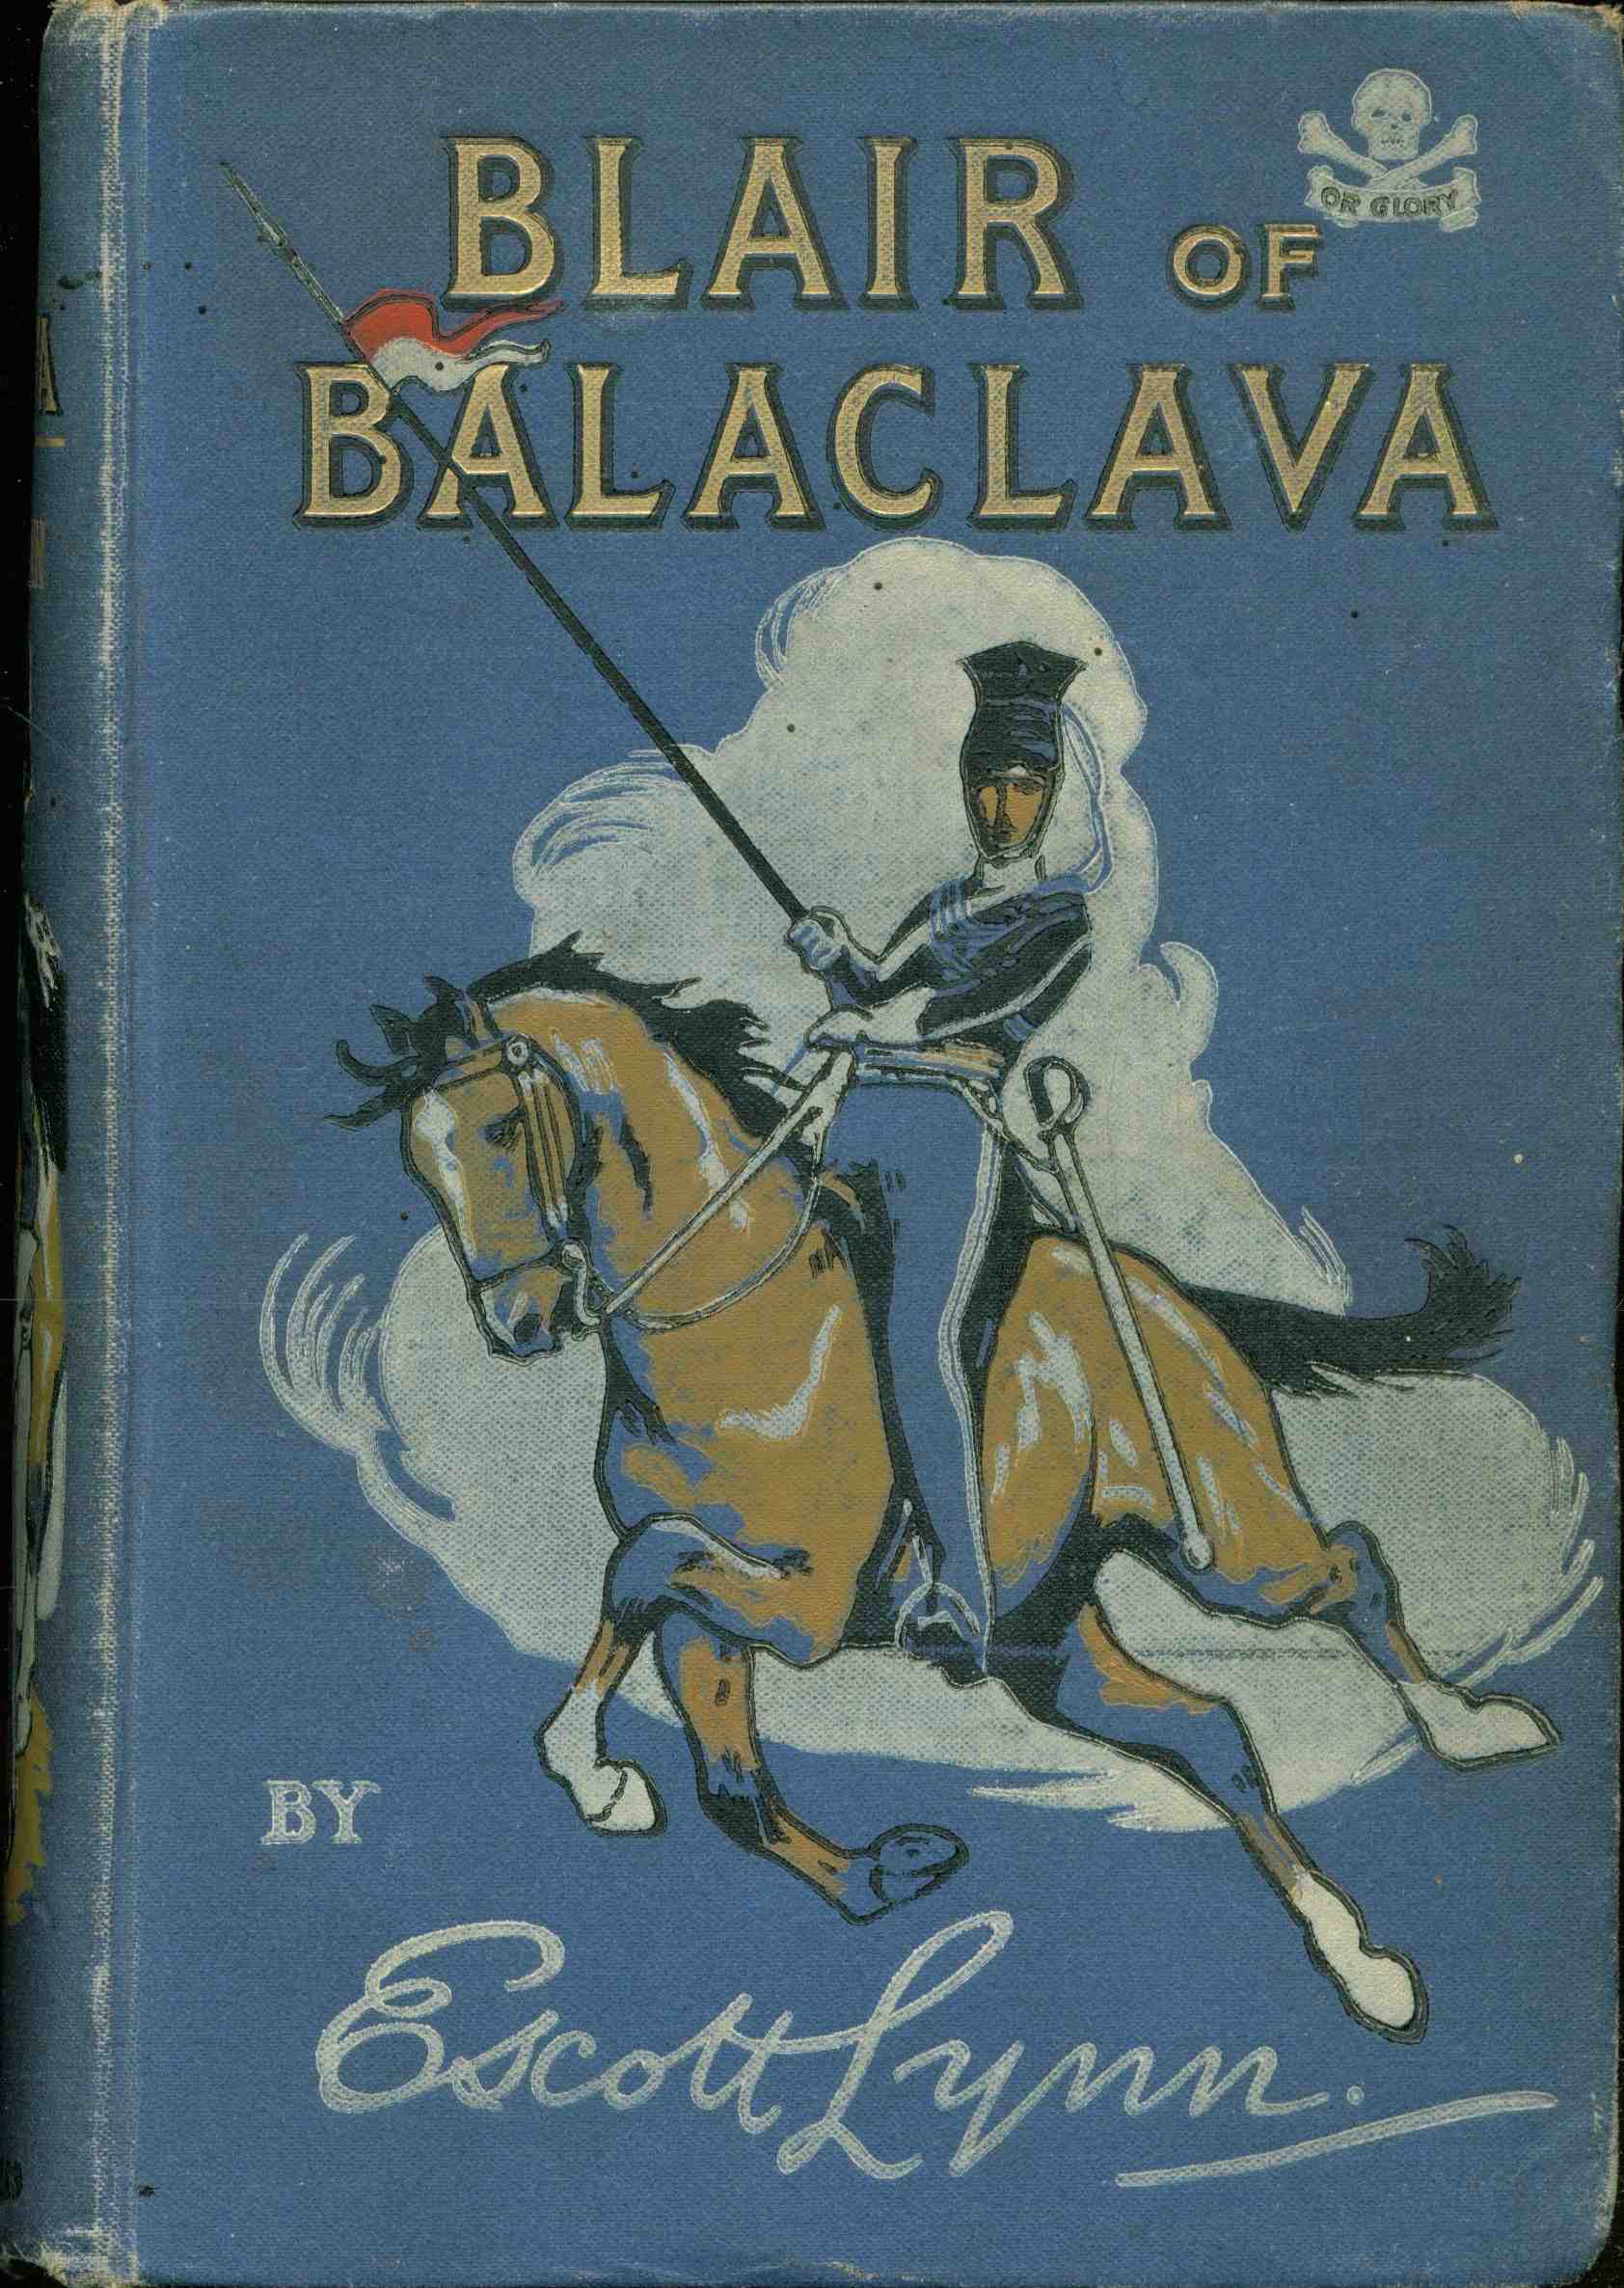 The Project Gutenberg eBook of Blair of Balaclava, by Escott Lynn.